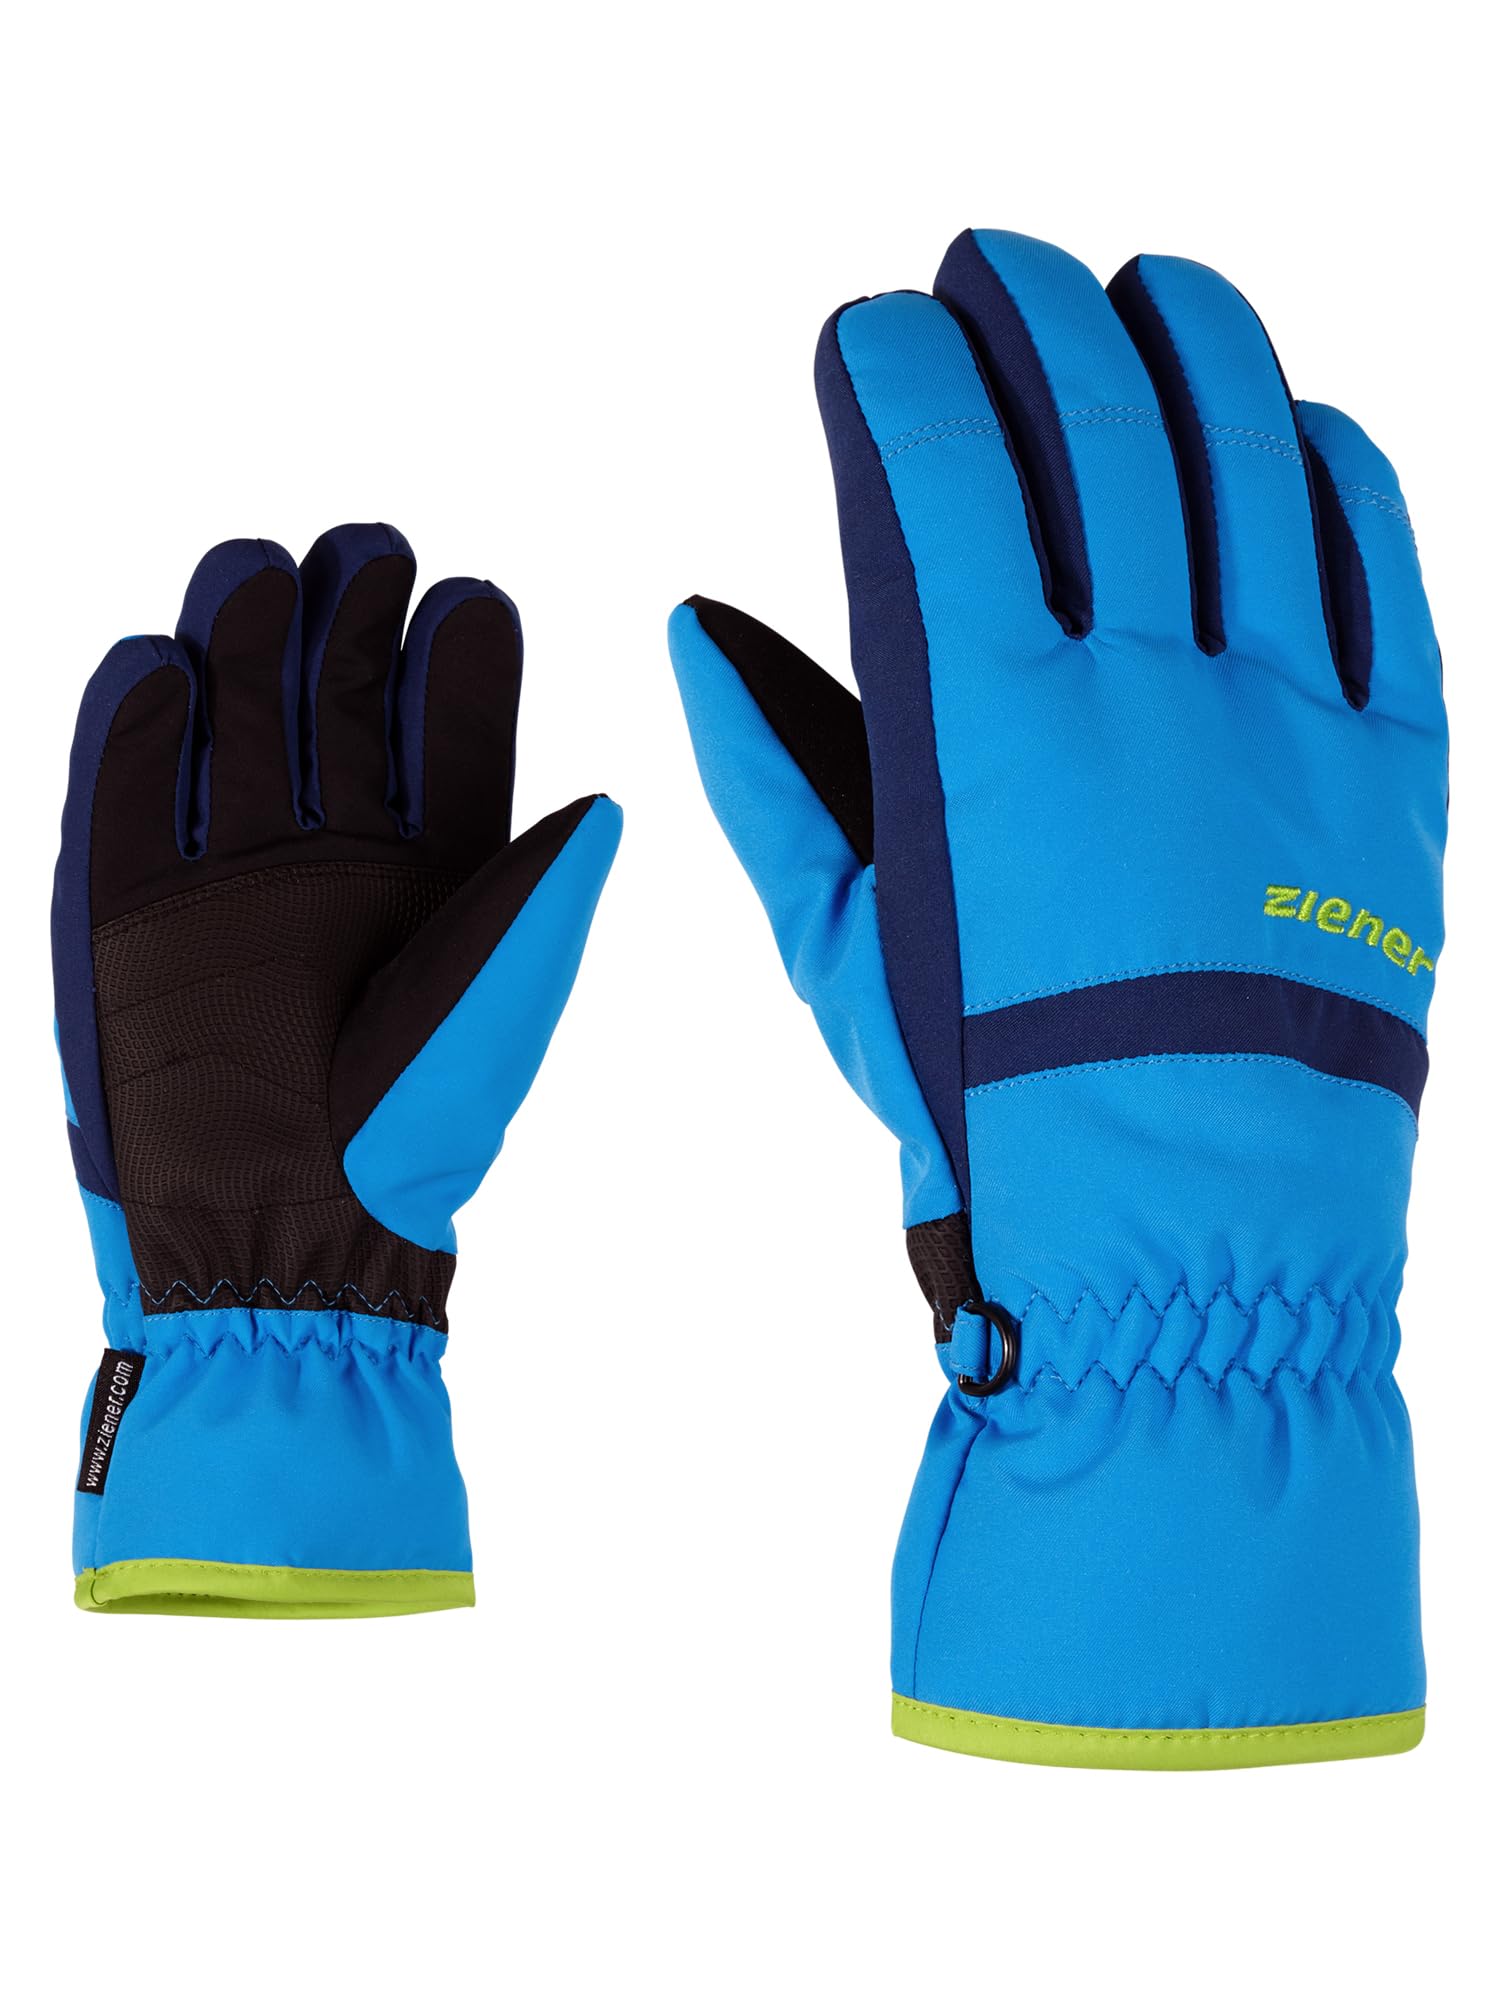 Ziener LEJANO Kinder AS Ski-Handschuhe/Wintersport | Wasserdicht Atmungsaktiv, persian blue, 7